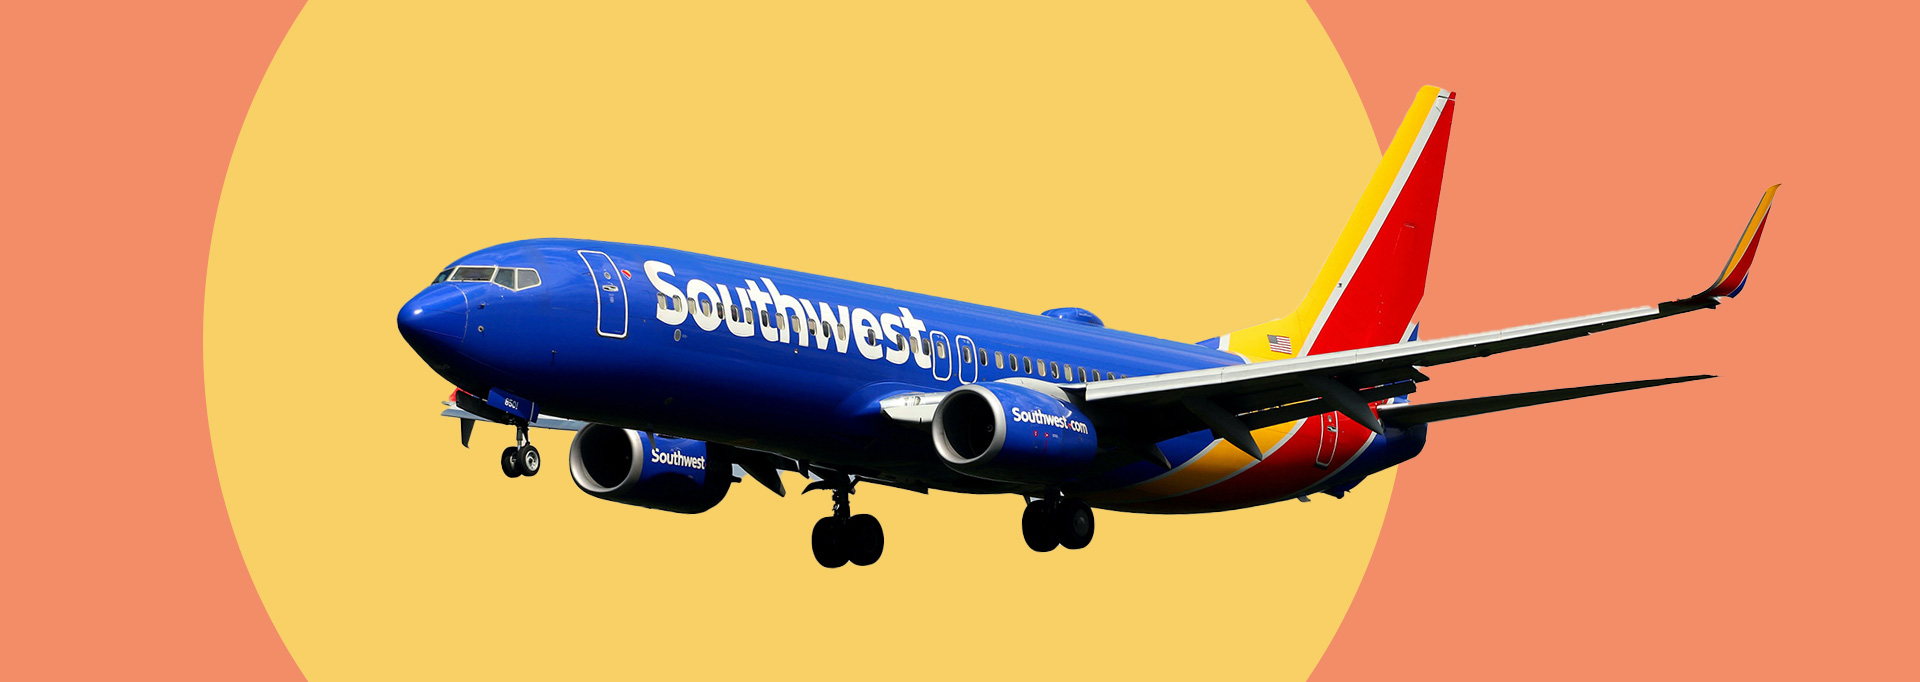 Southwest plane on colorful background